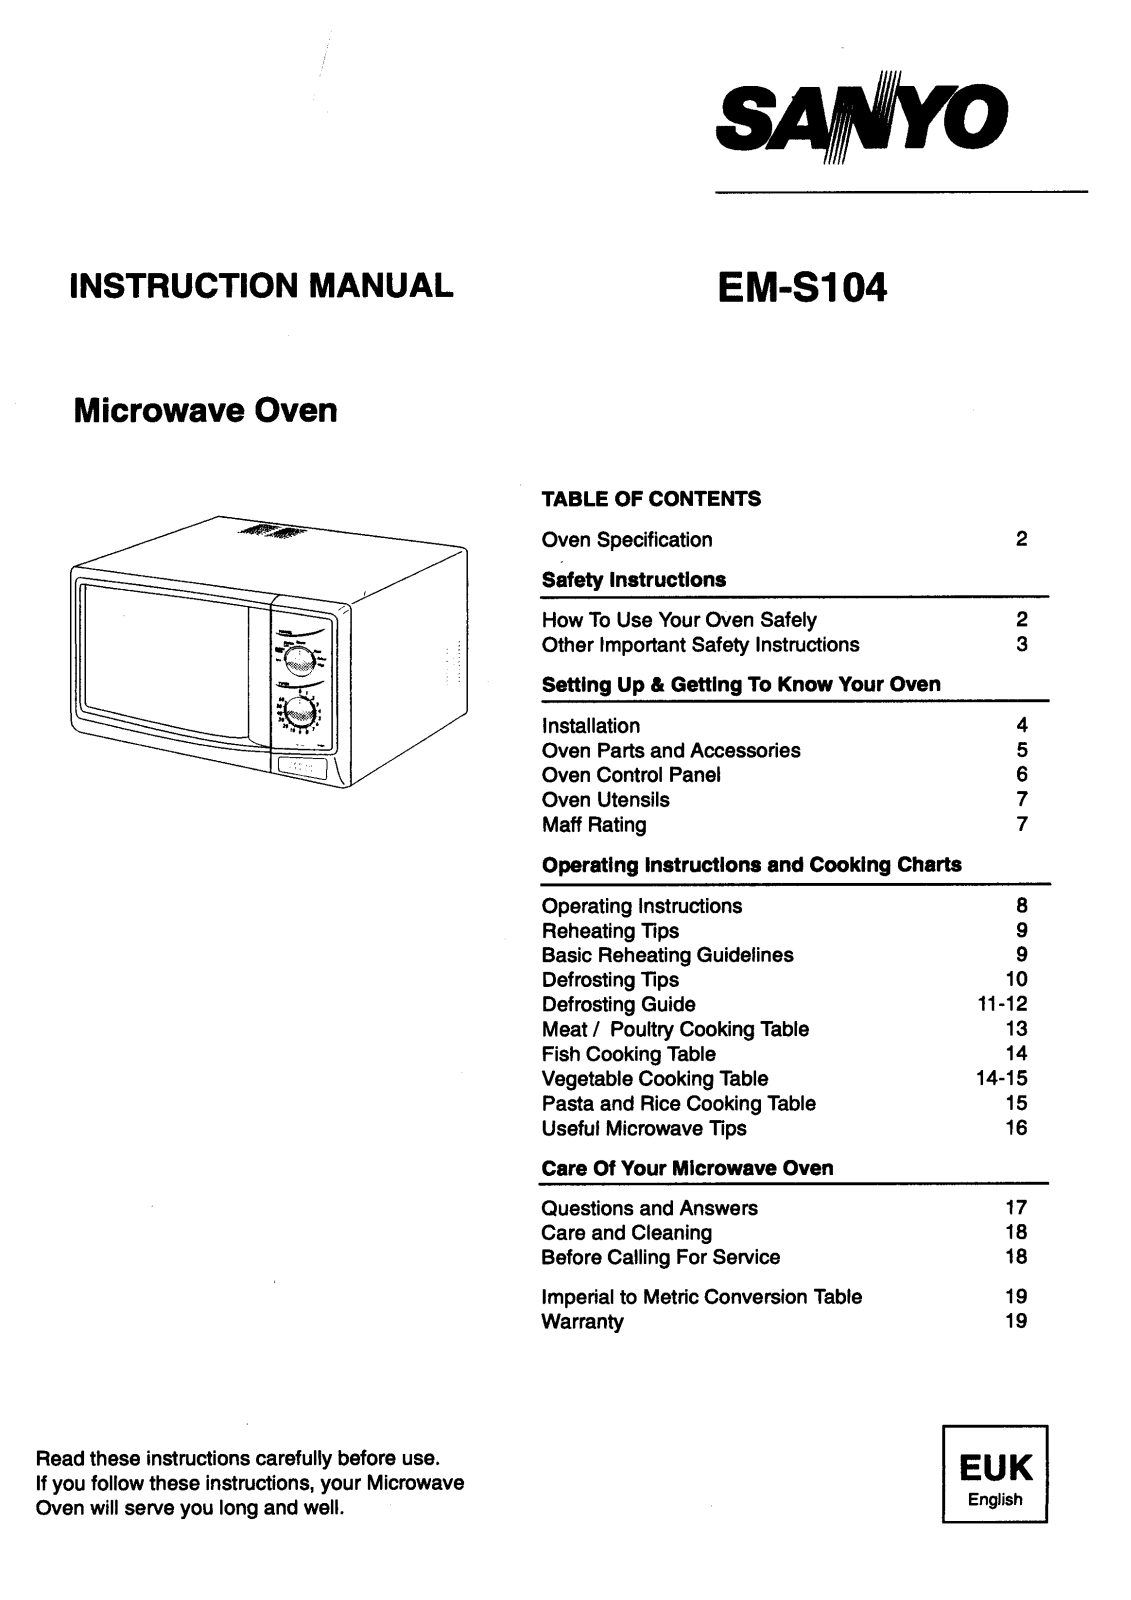 Sanyo EM-S104 Instruction Manual